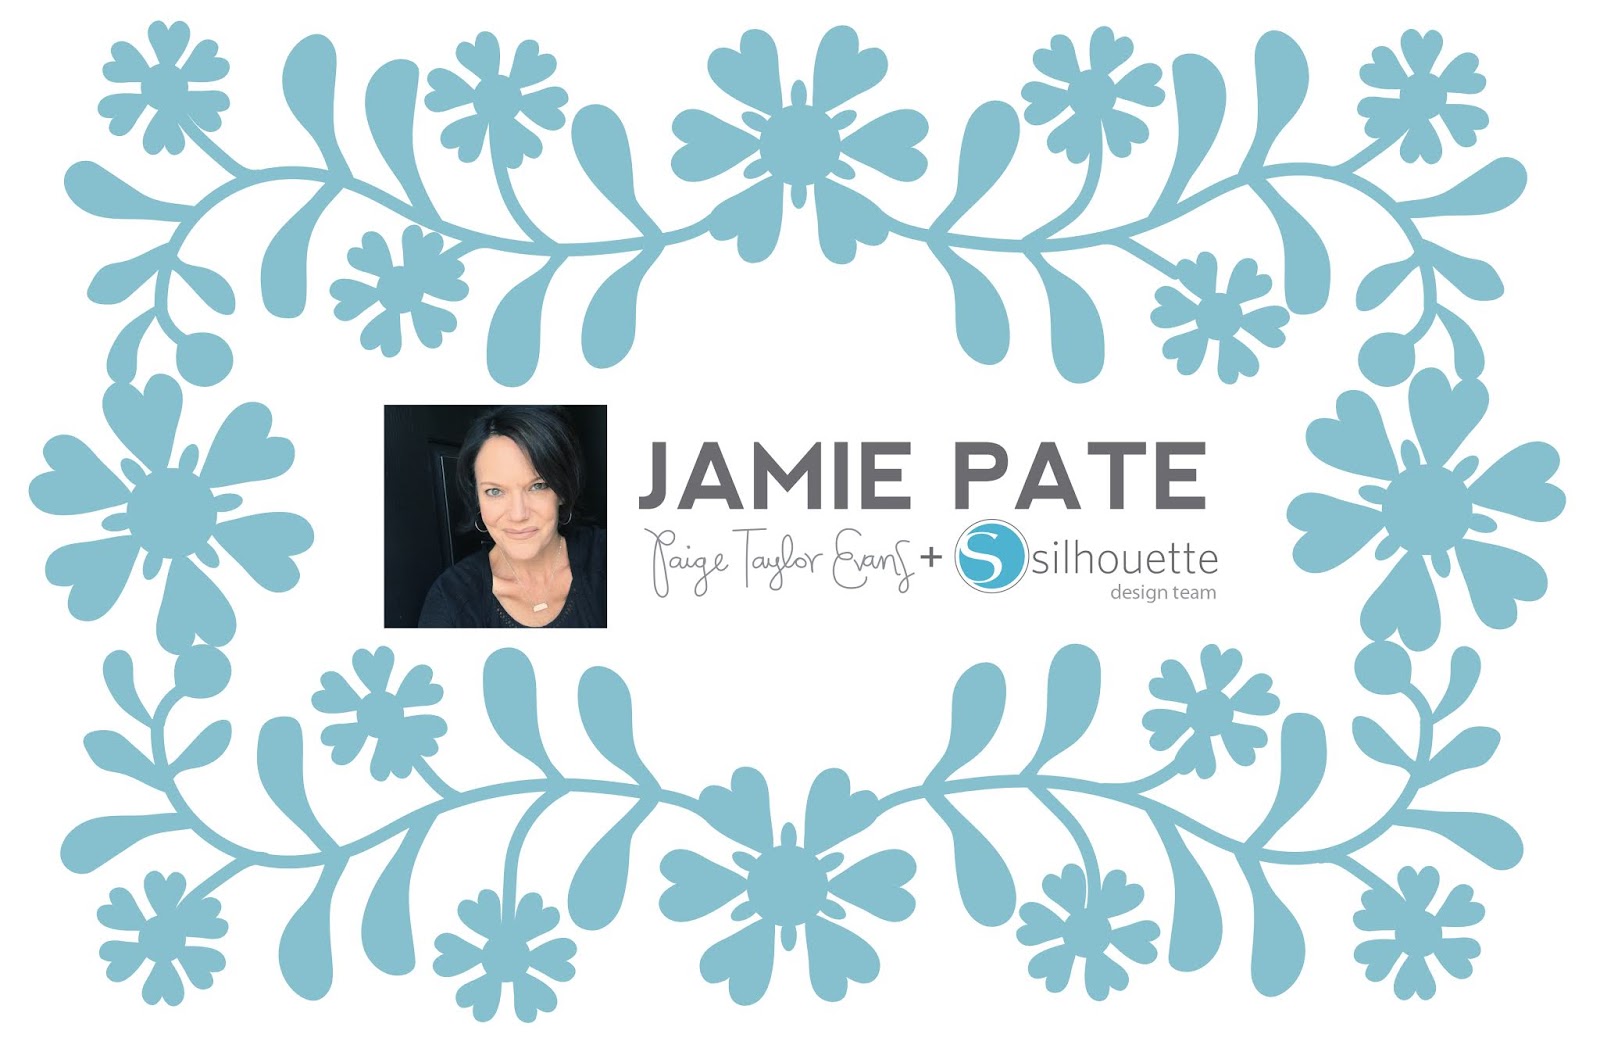 jamie pate: Work Space Wednesday